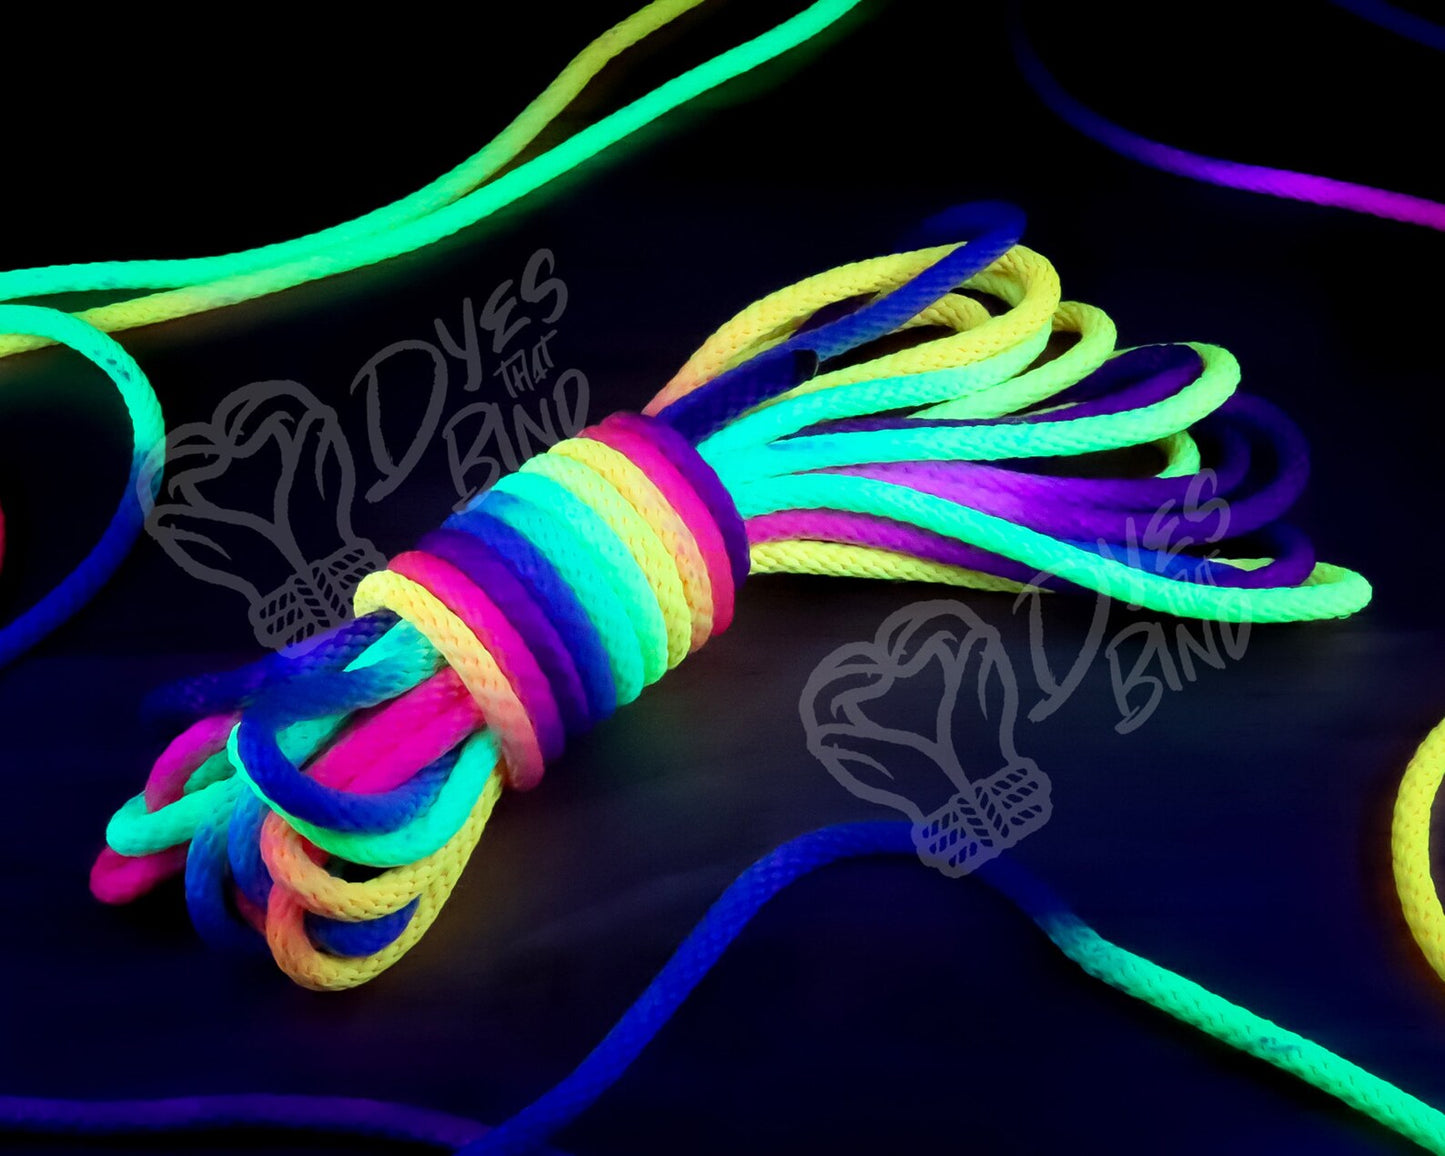 Neon Rainbow Solid Braid Silky Nylon Rope - 30ft hank